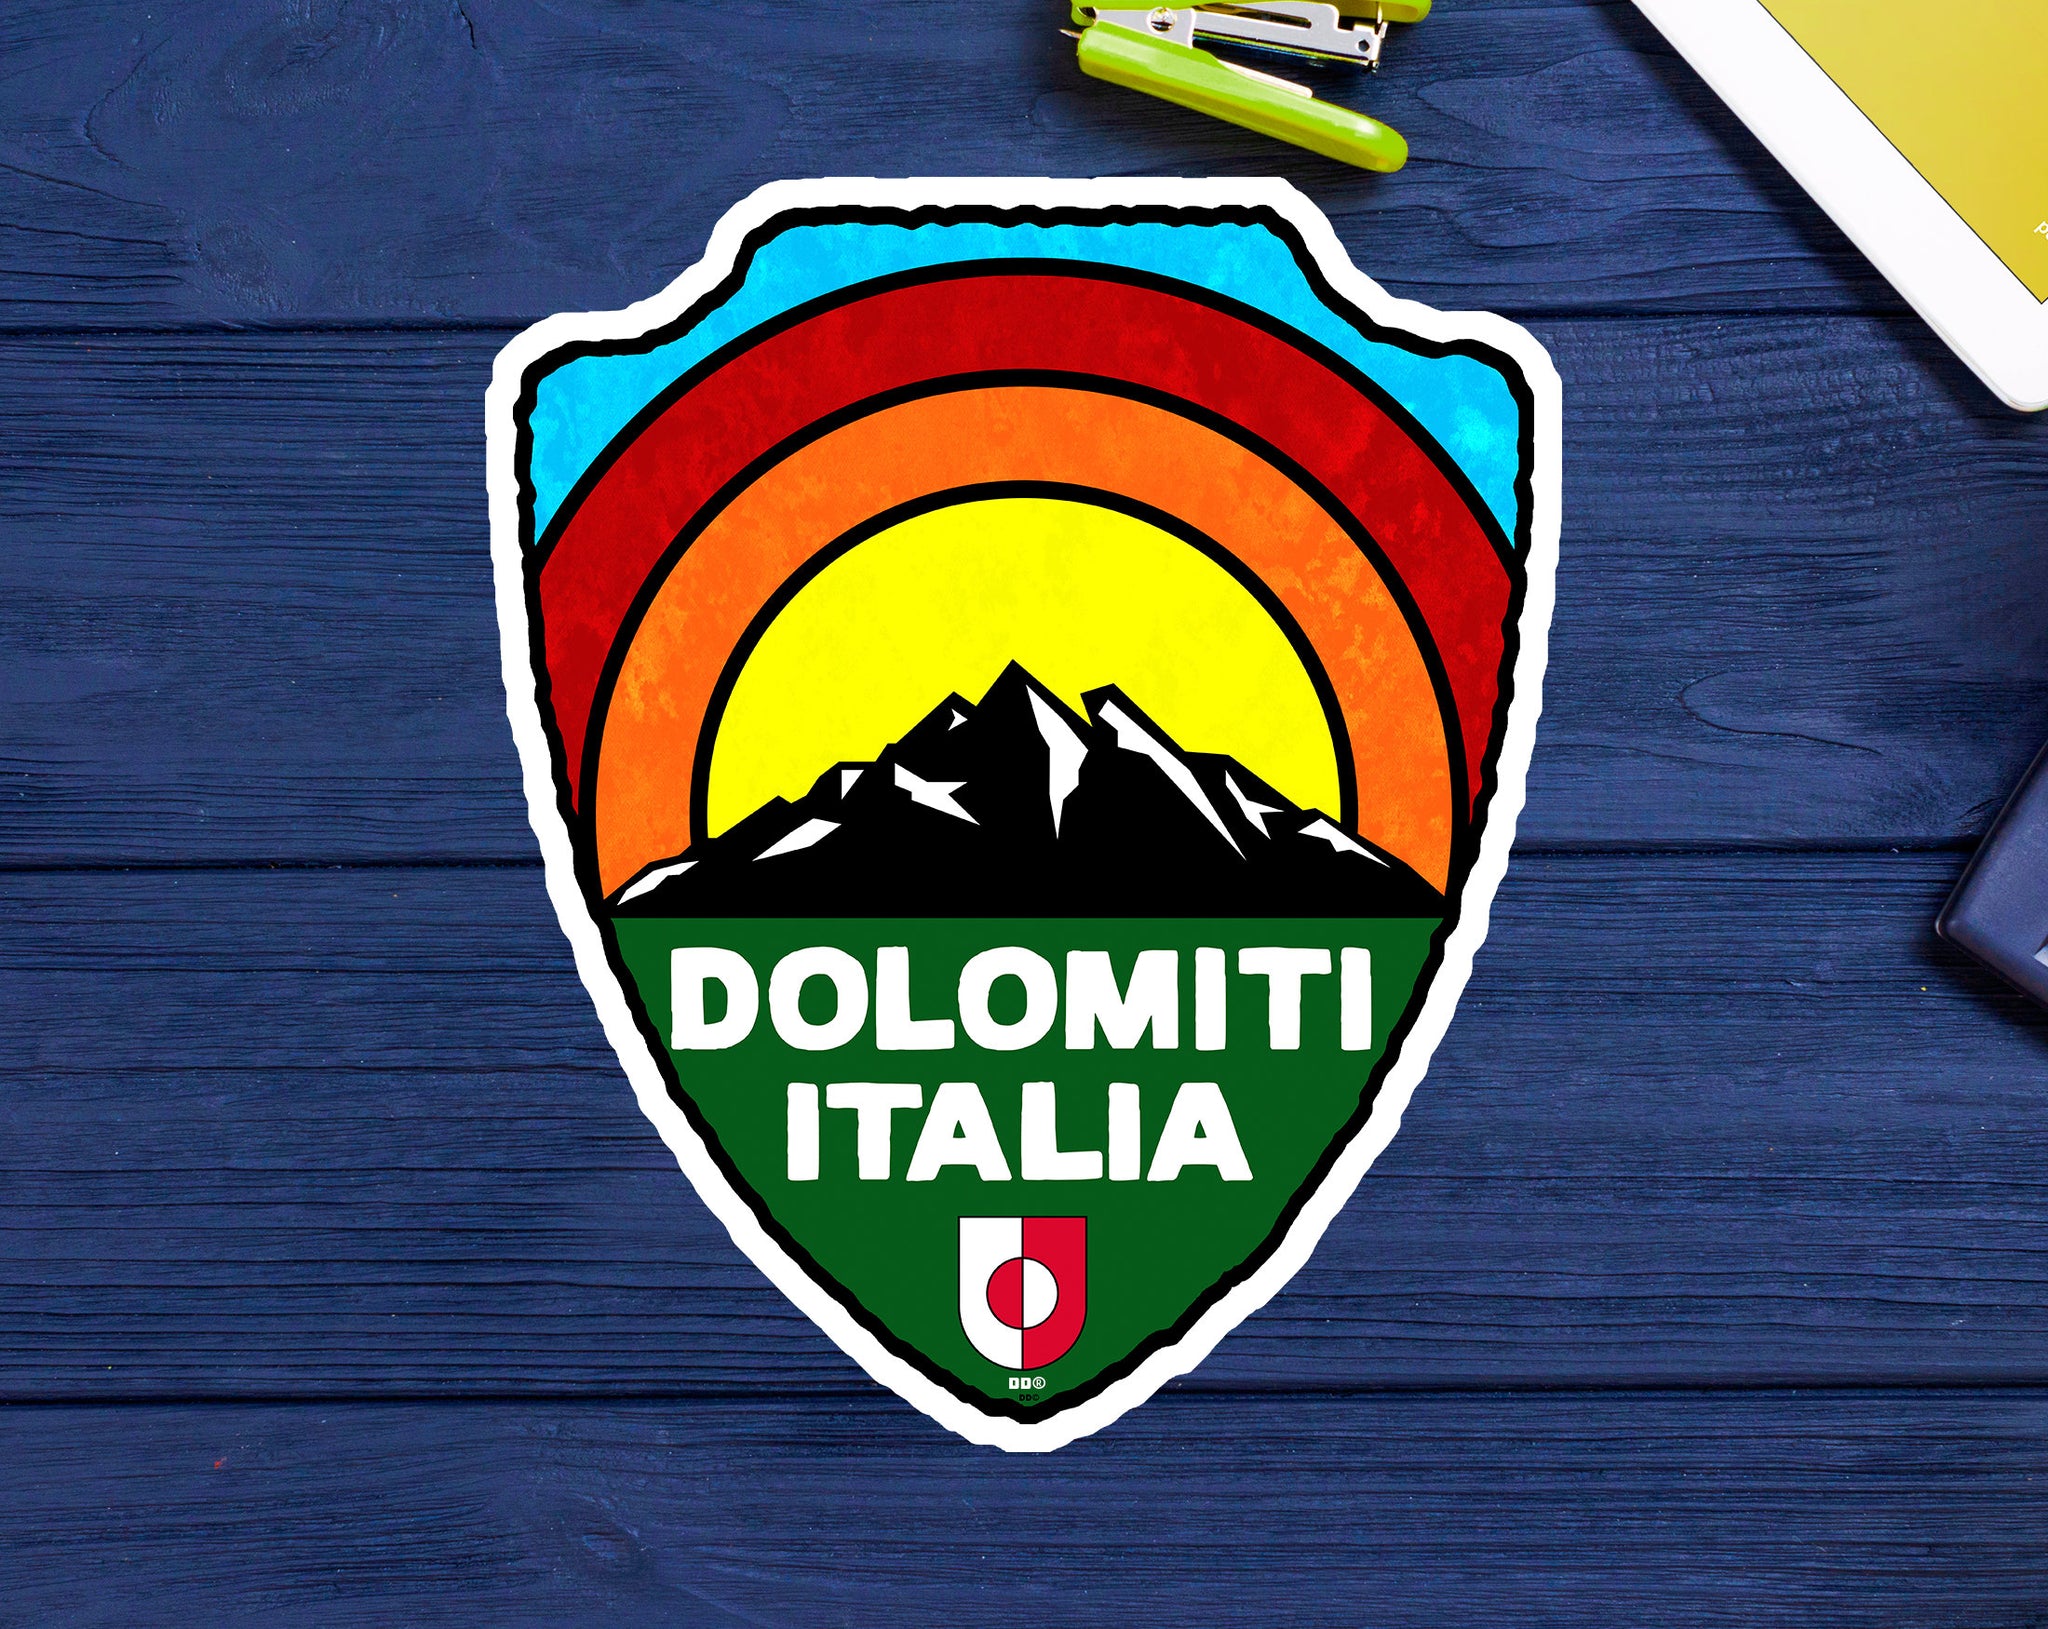 Ski Dolomiti Italia Decal Sticker Vinyl 3.25" x 2.75" Dolomites Italy Skiing